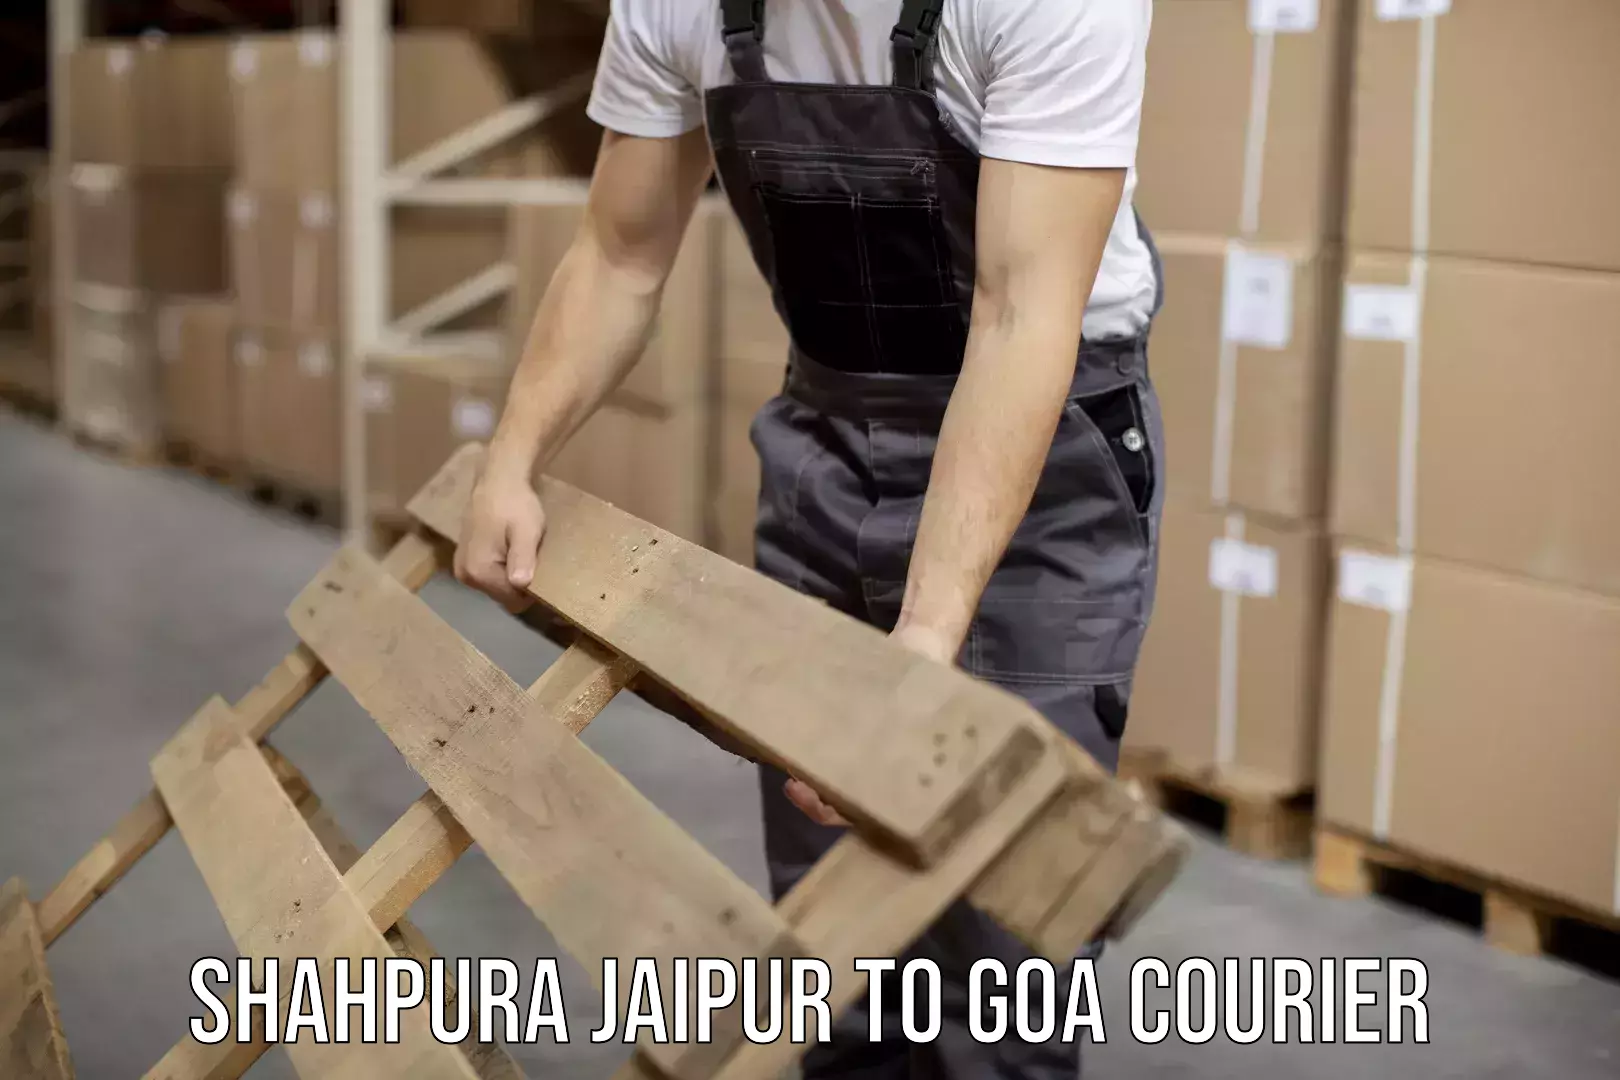 Courier service efficiency Shahpura Jaipur to South Goa